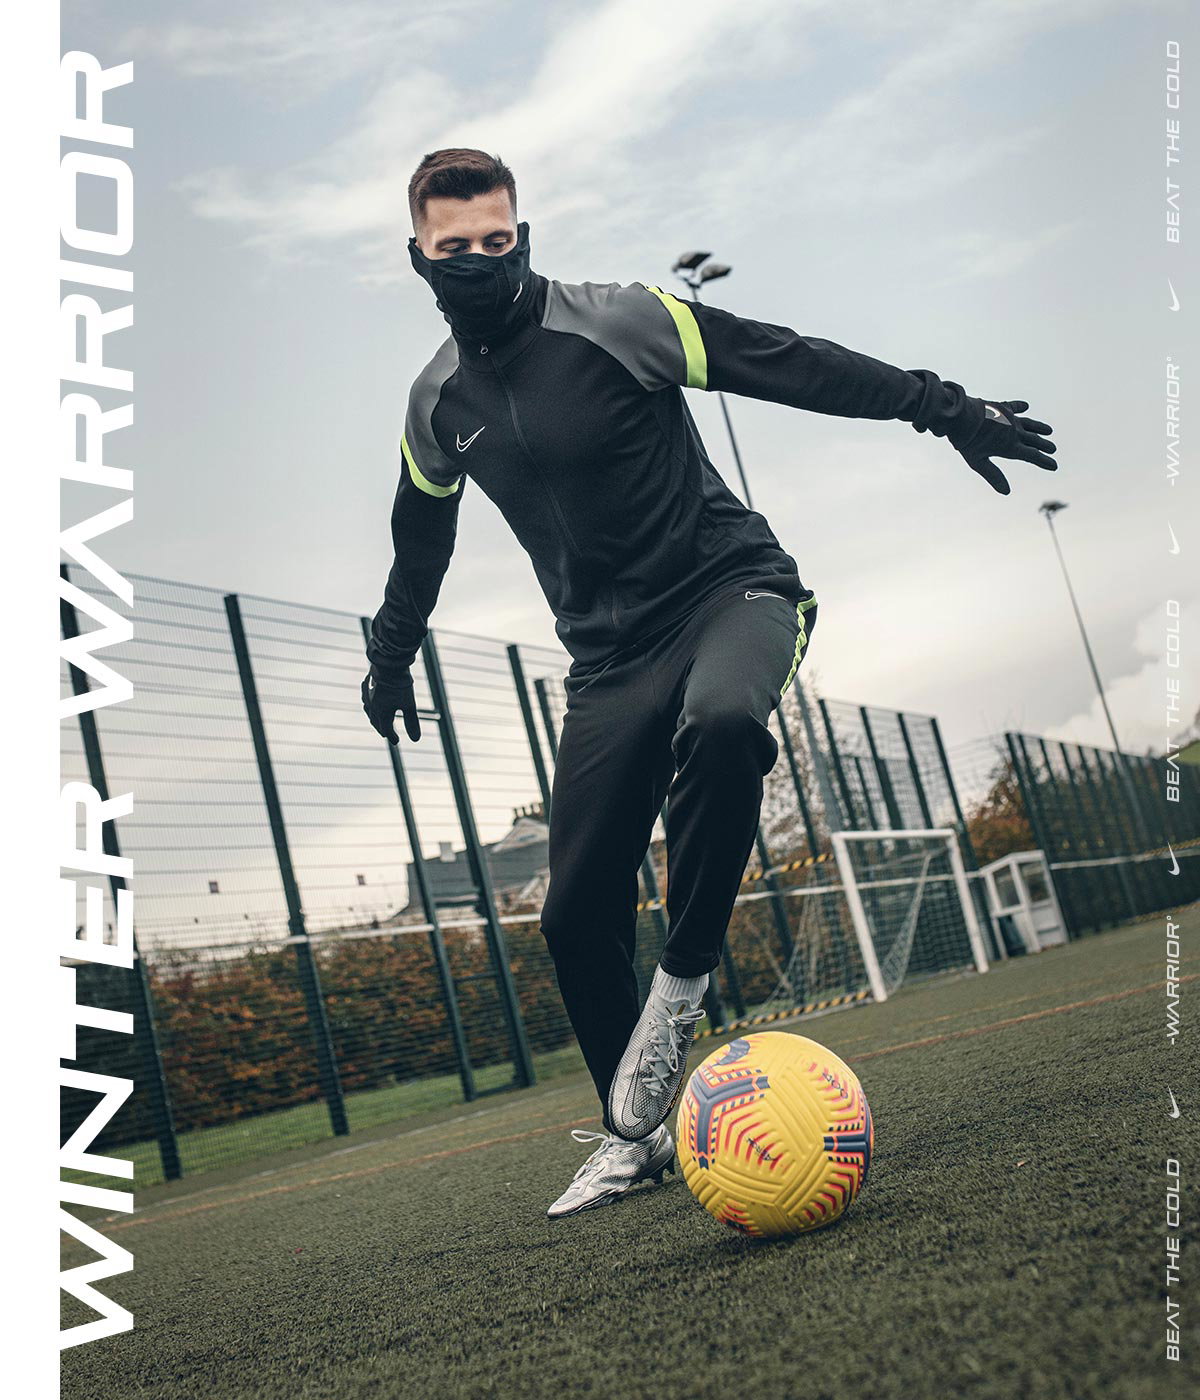 Especial Para buscar refugio portátil Lovell Soccer: Nike Winter Warrior Collection ❄ Gear Up 💪 | Milled